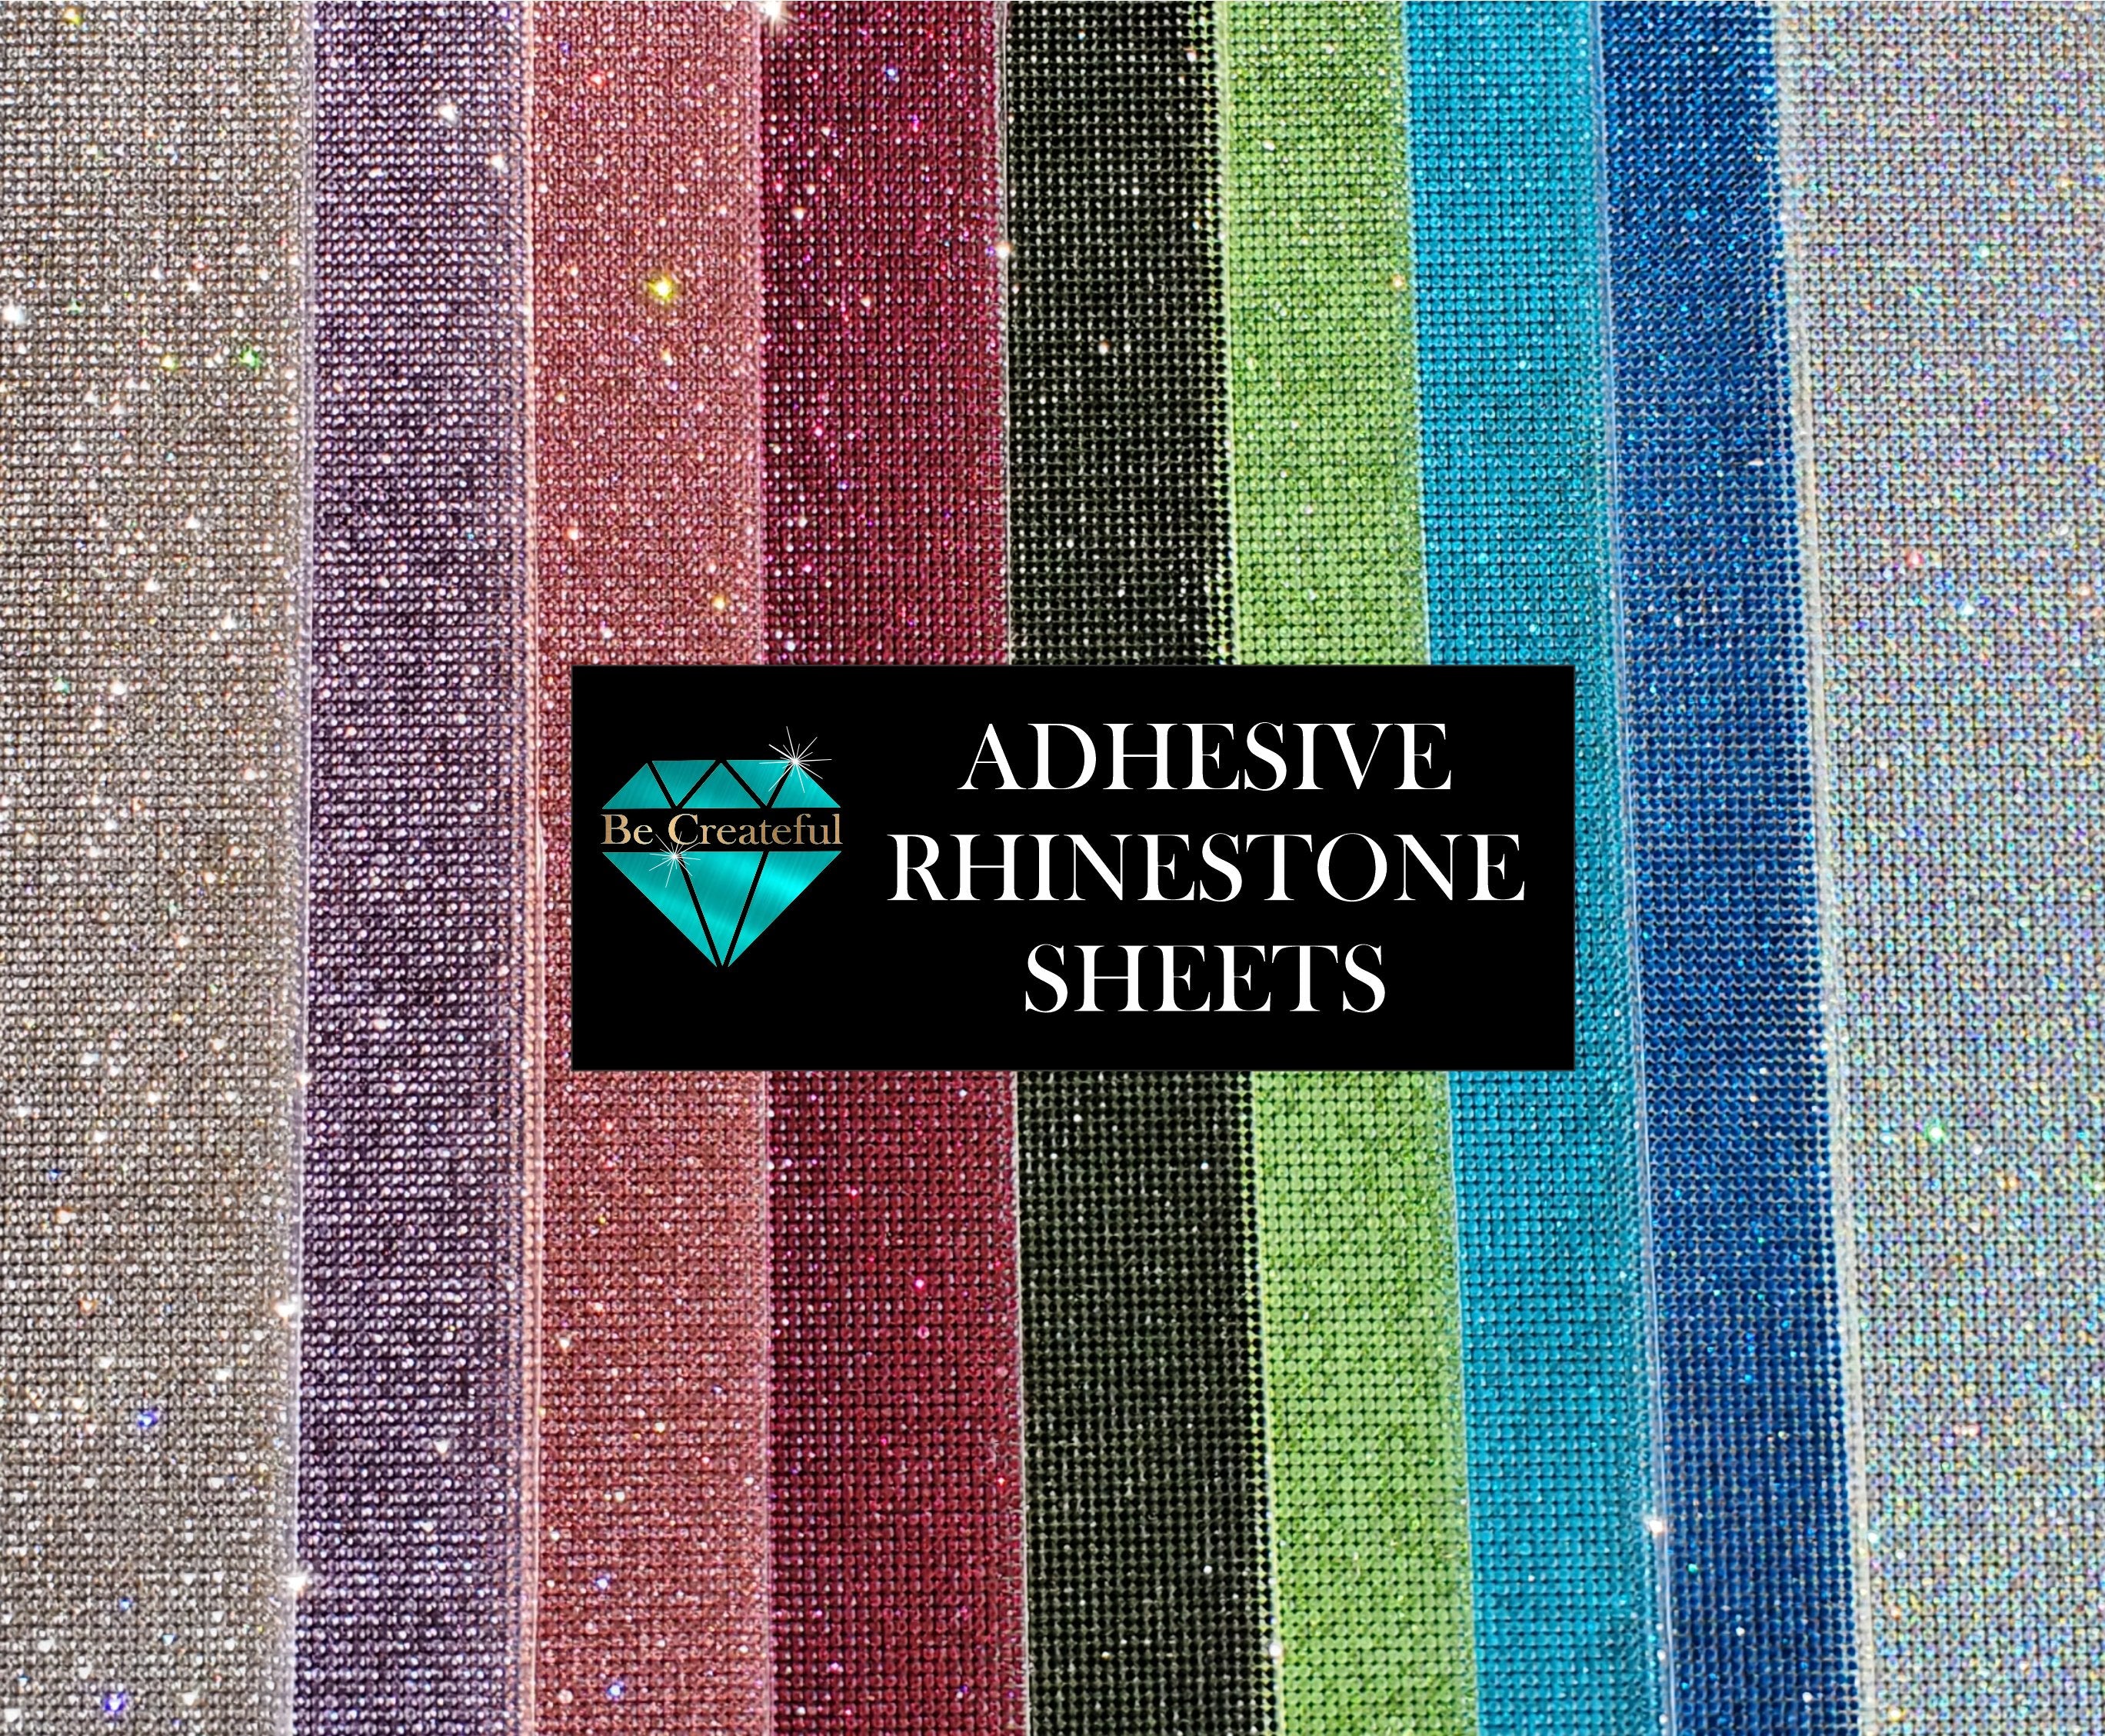 Be Createful-Sticky Adhesive Rhinestone Sheets 5 ⭐ rated